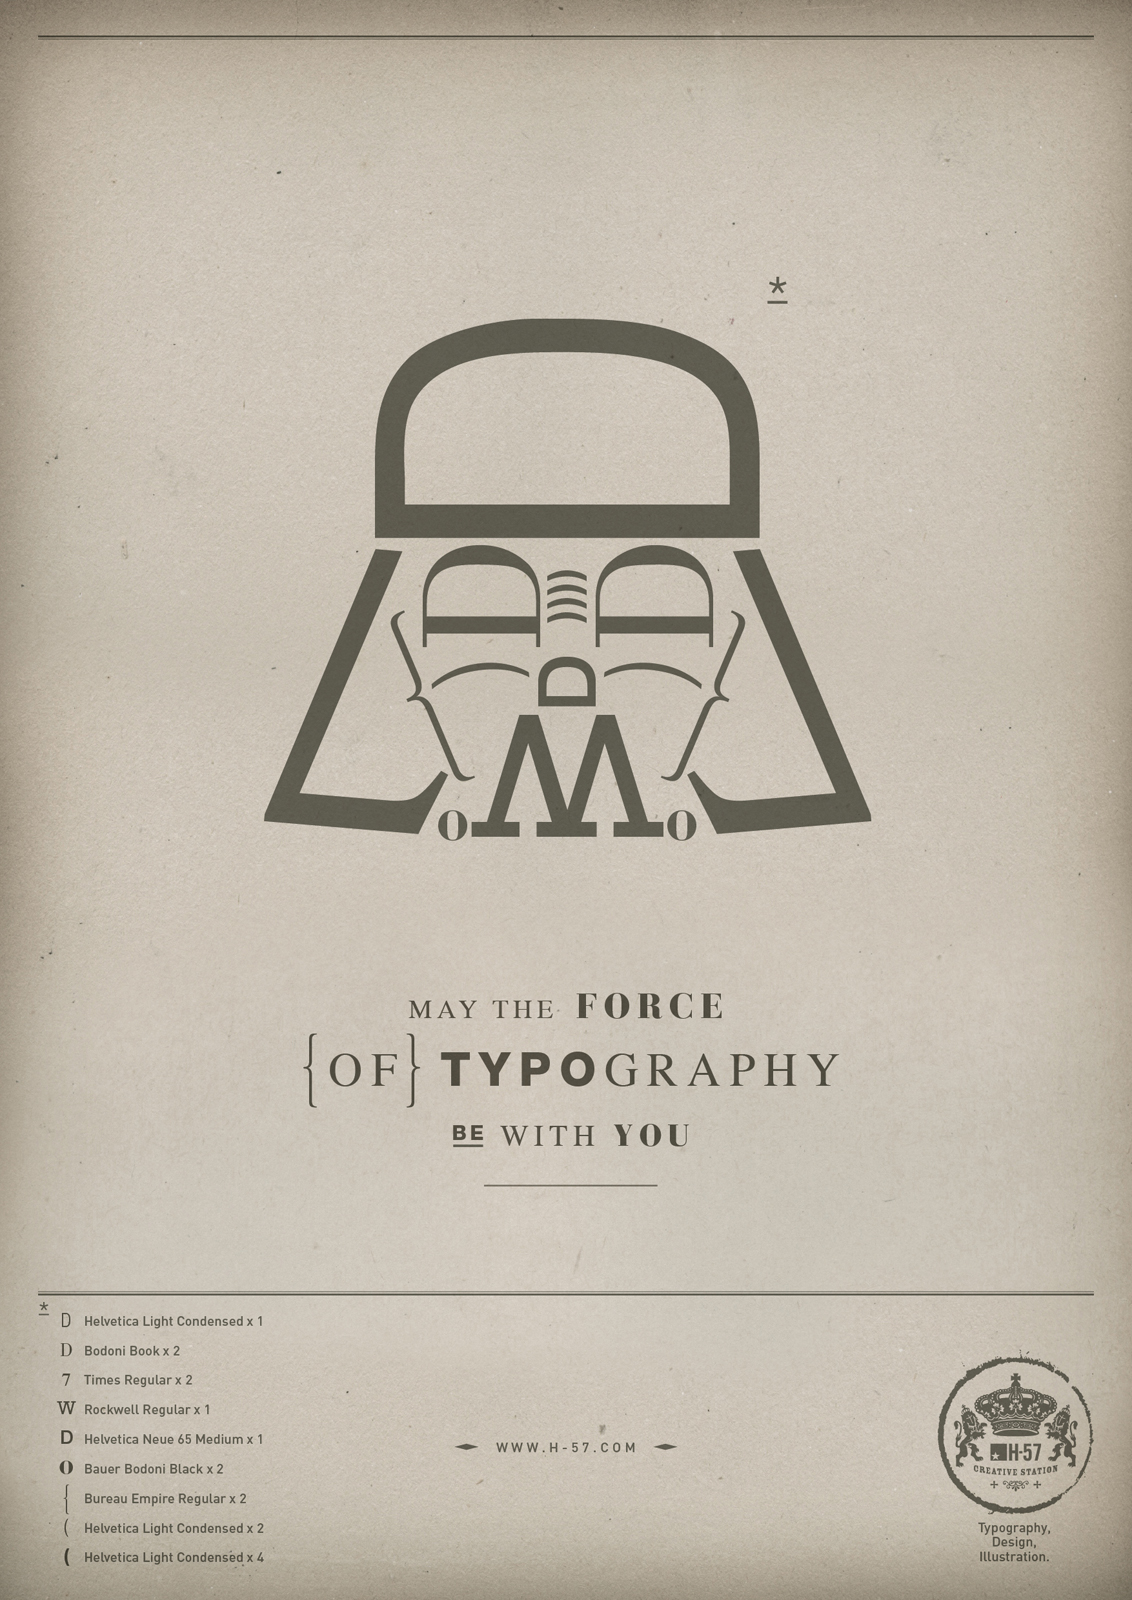 http://2.bp.blogspot.com/_4ebKDFxiia8/TOL7elGx_yI/AAAAAAAAIjM/dQ-b8J04gTY/s1600/The-force-of-Typography382.jpg